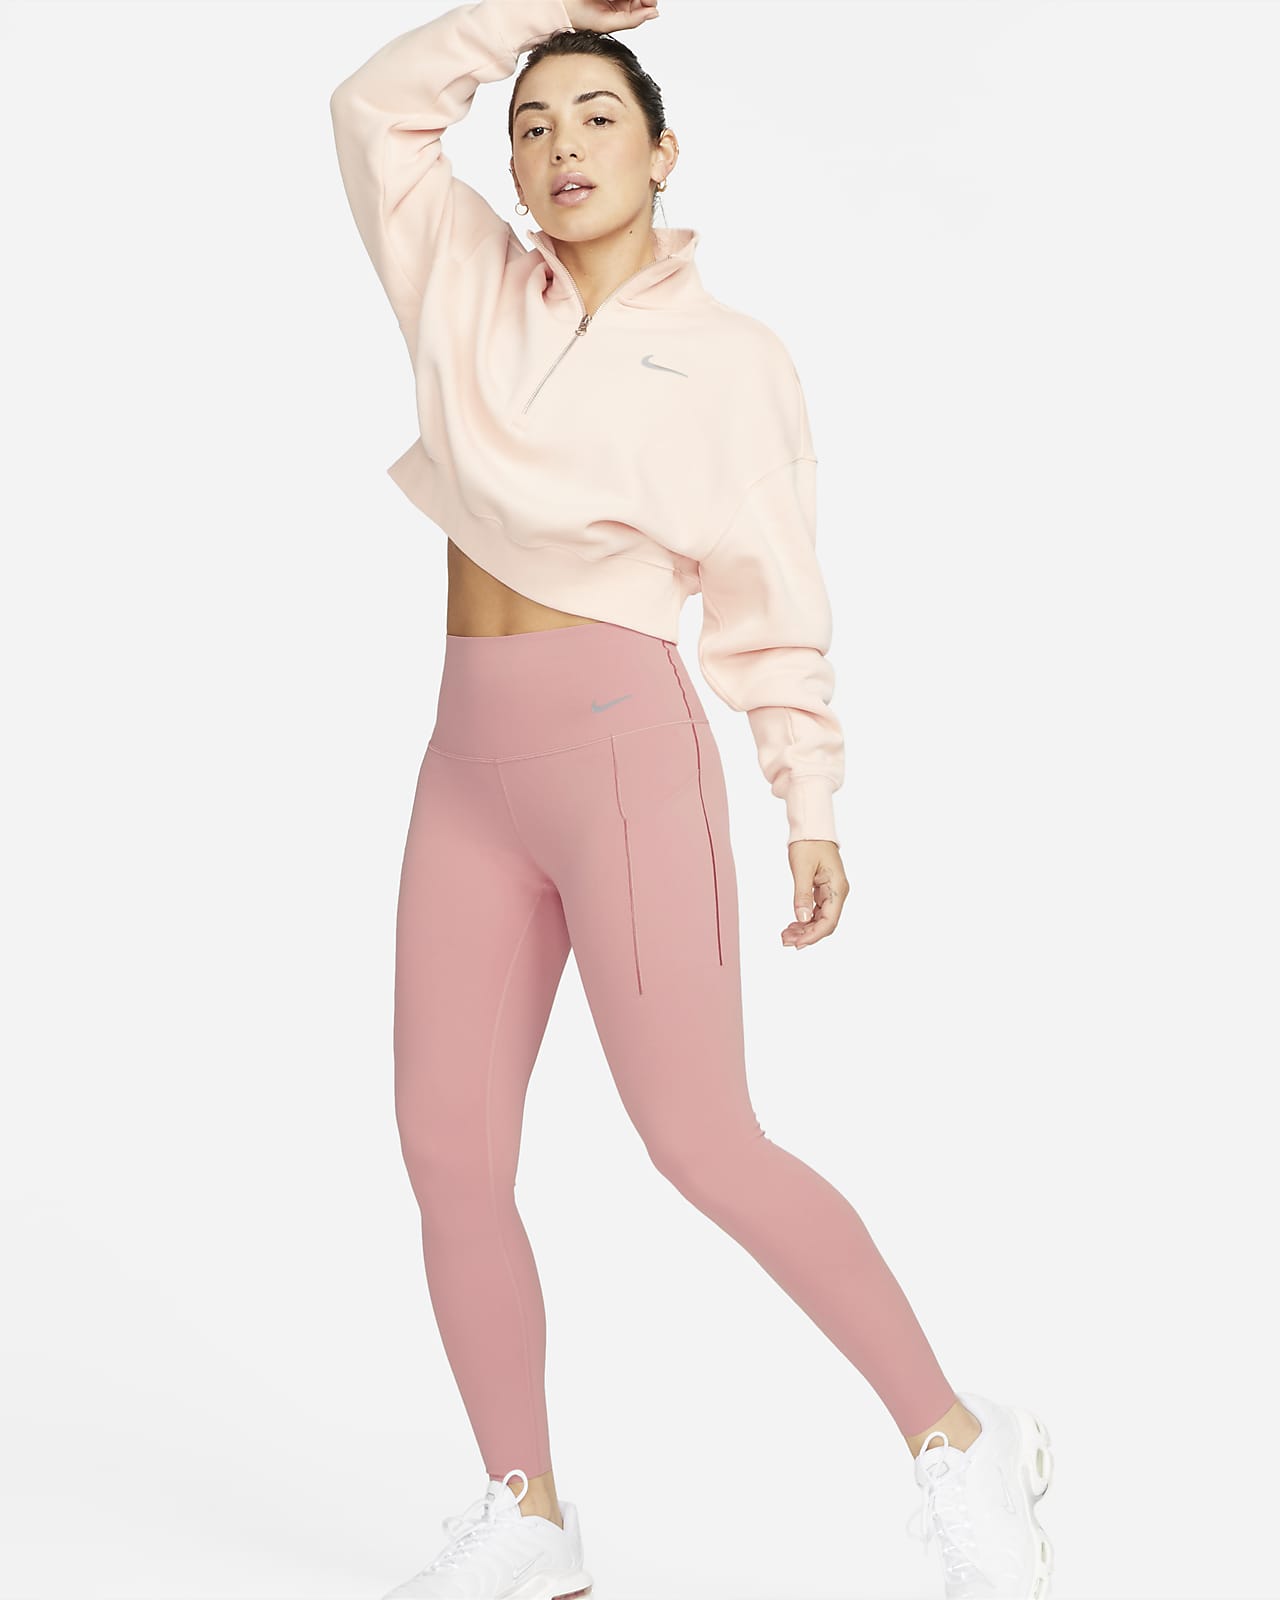 Nike Universa-leggings i længde med medium støtte, høj talje og lommer til kvinder. Nike